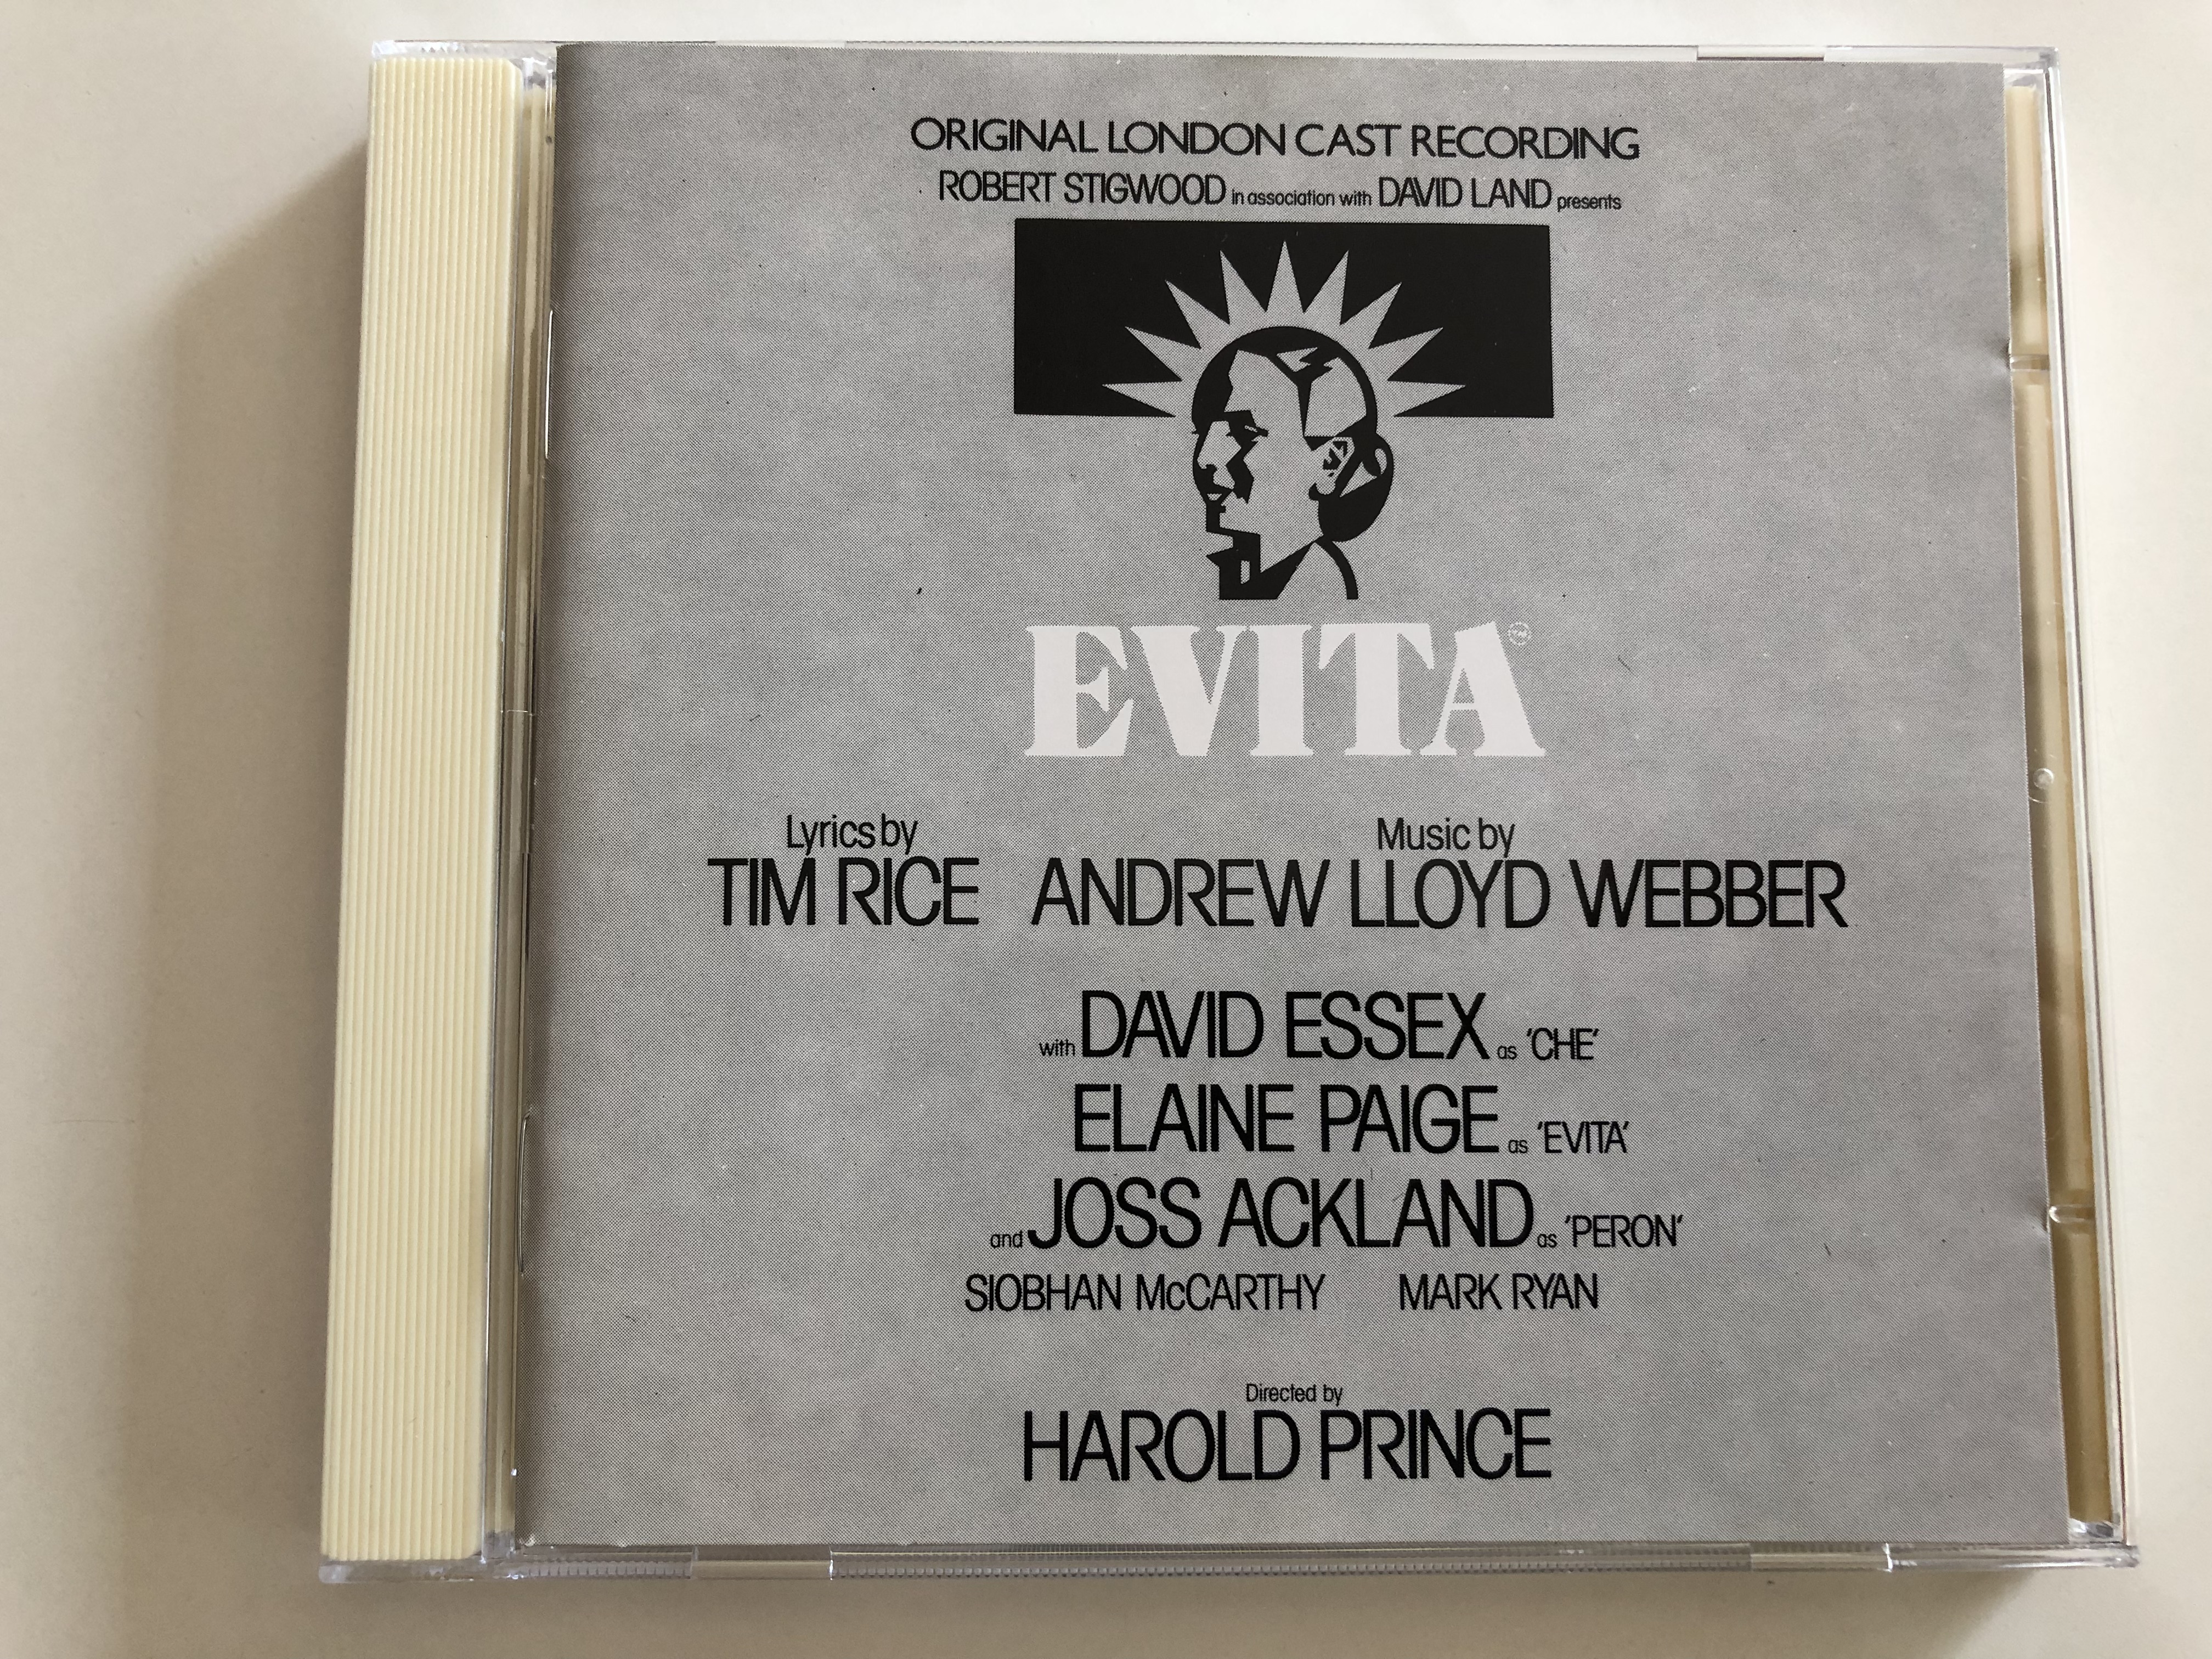 evita-excerpts-from-the-original-london-cast-recording-music-andrew-lloyd-webber-lyrics-tim-rice-david-essex-elaine-paige-joss-ackland-directed-by-harold-prince-audio-cd-1978-bmg-ariola-mcd-03527-1-.jpg